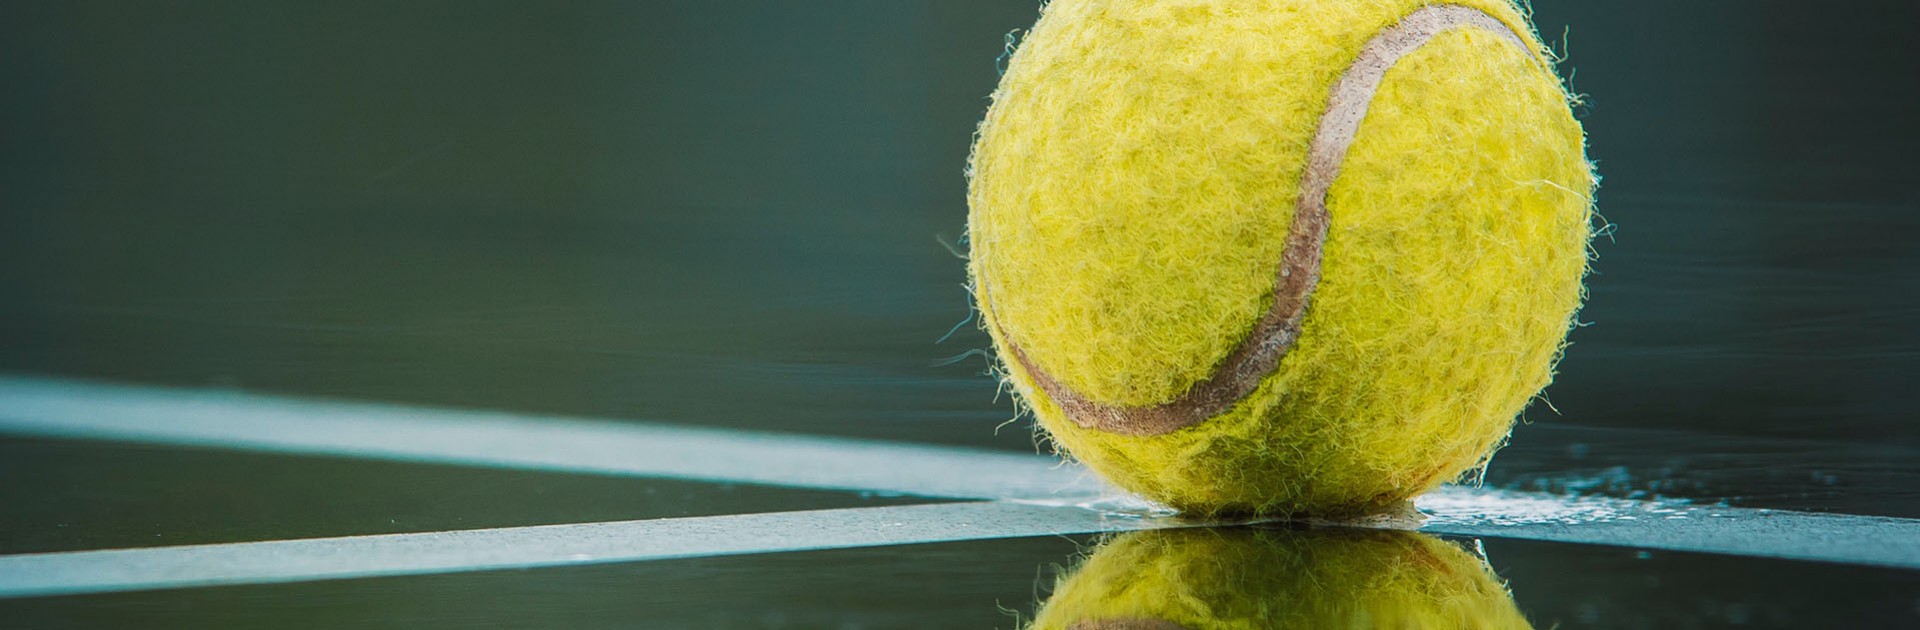 Tennisball - © Todd Trapani/pixabay.com